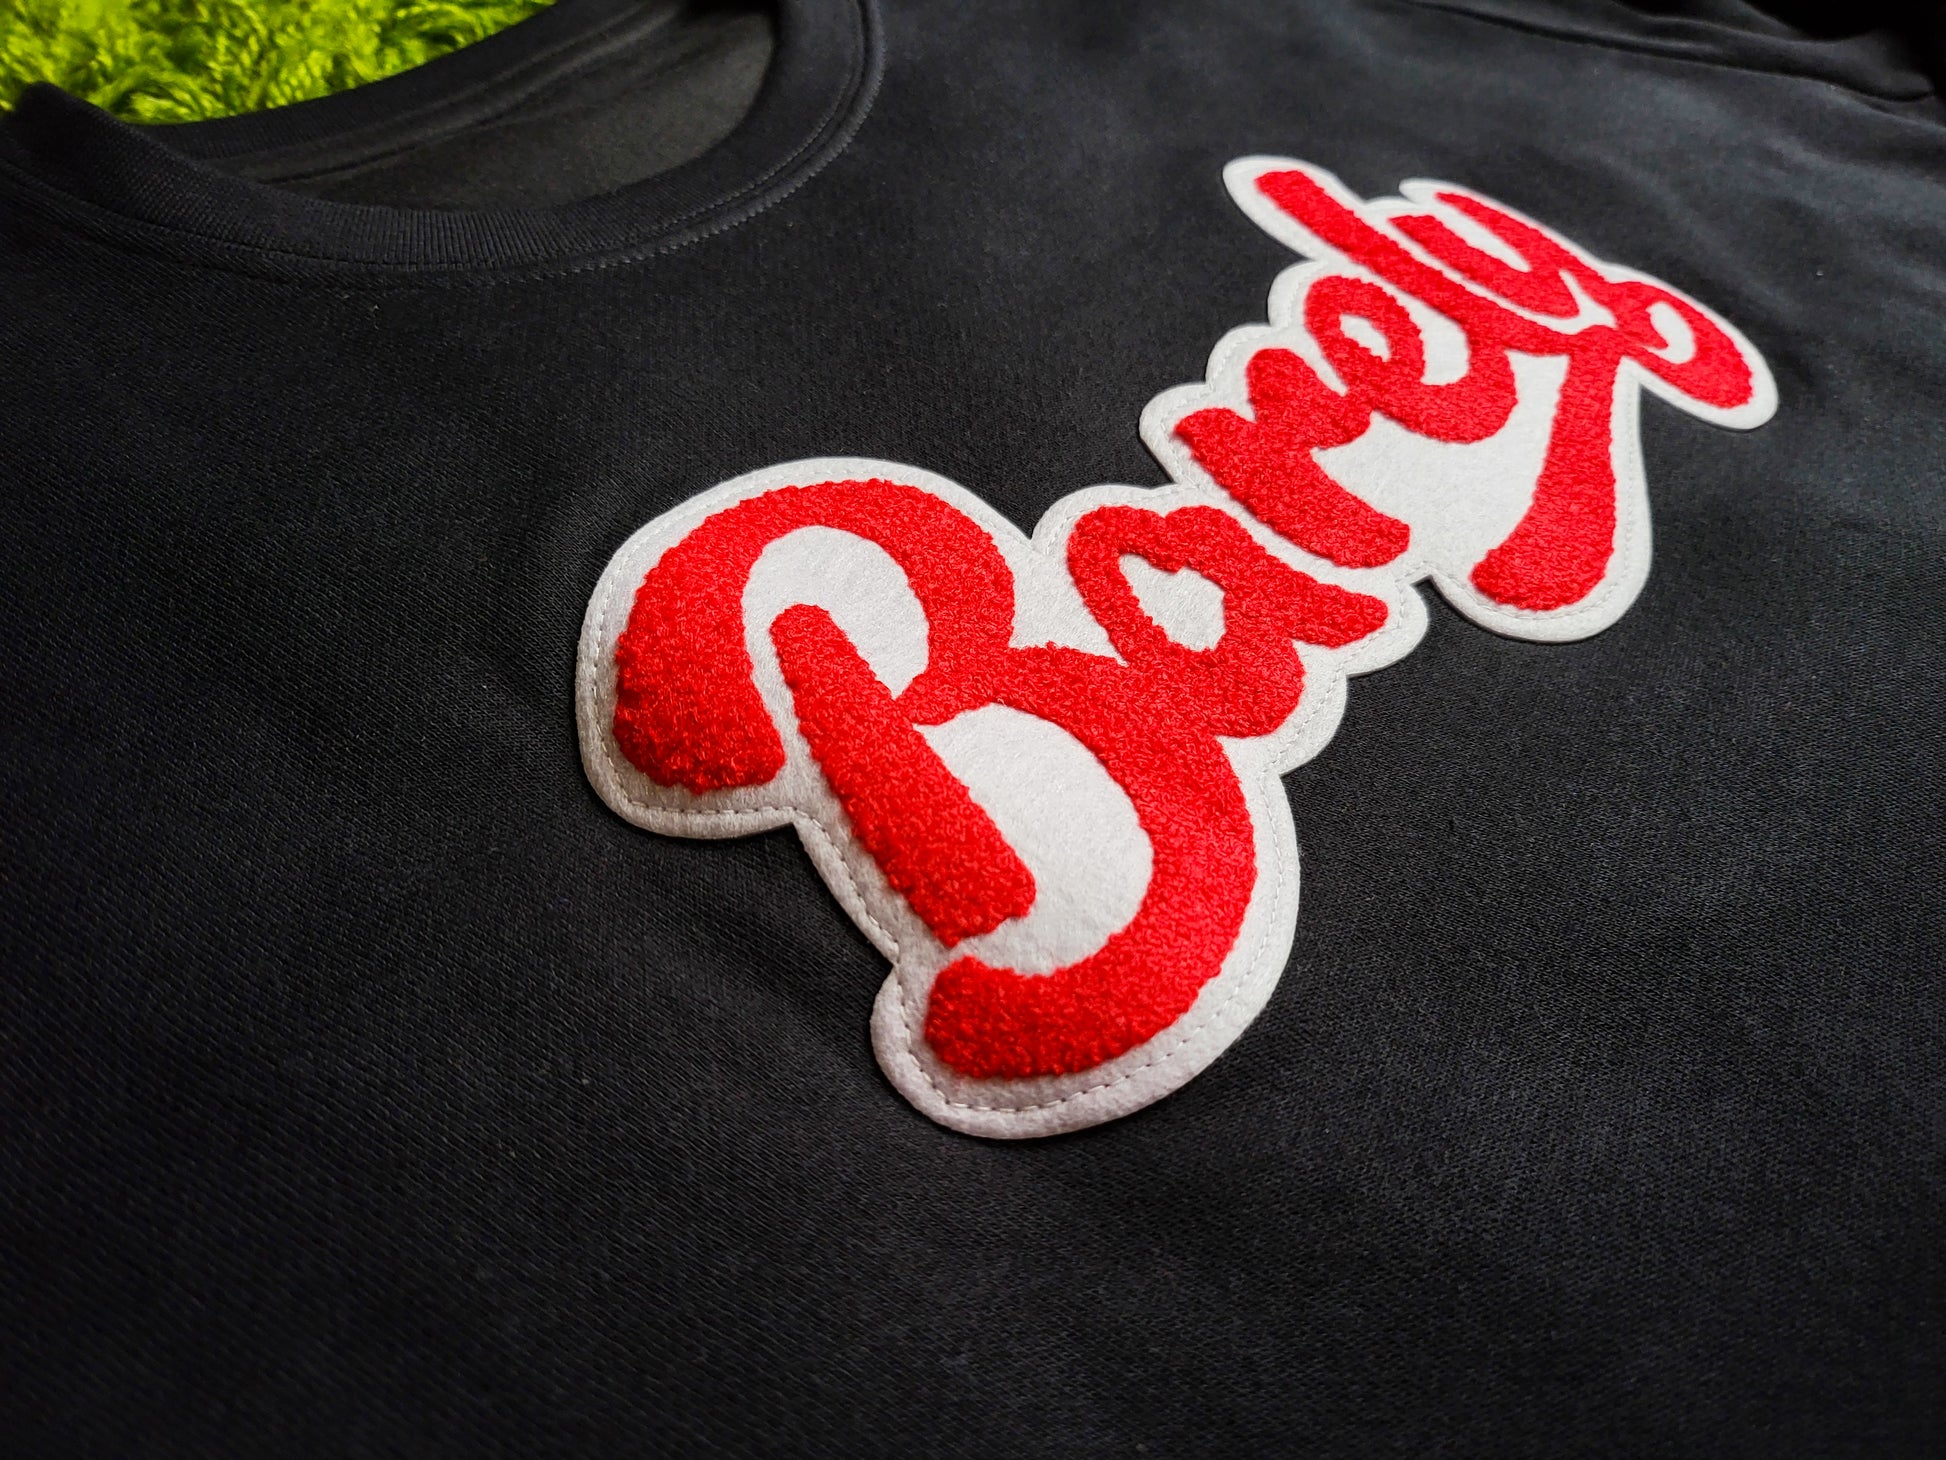 Barely "Script" Chenille Logo Crew Neck Sweatshirt - (Blk/Red) - Barely Ordinary